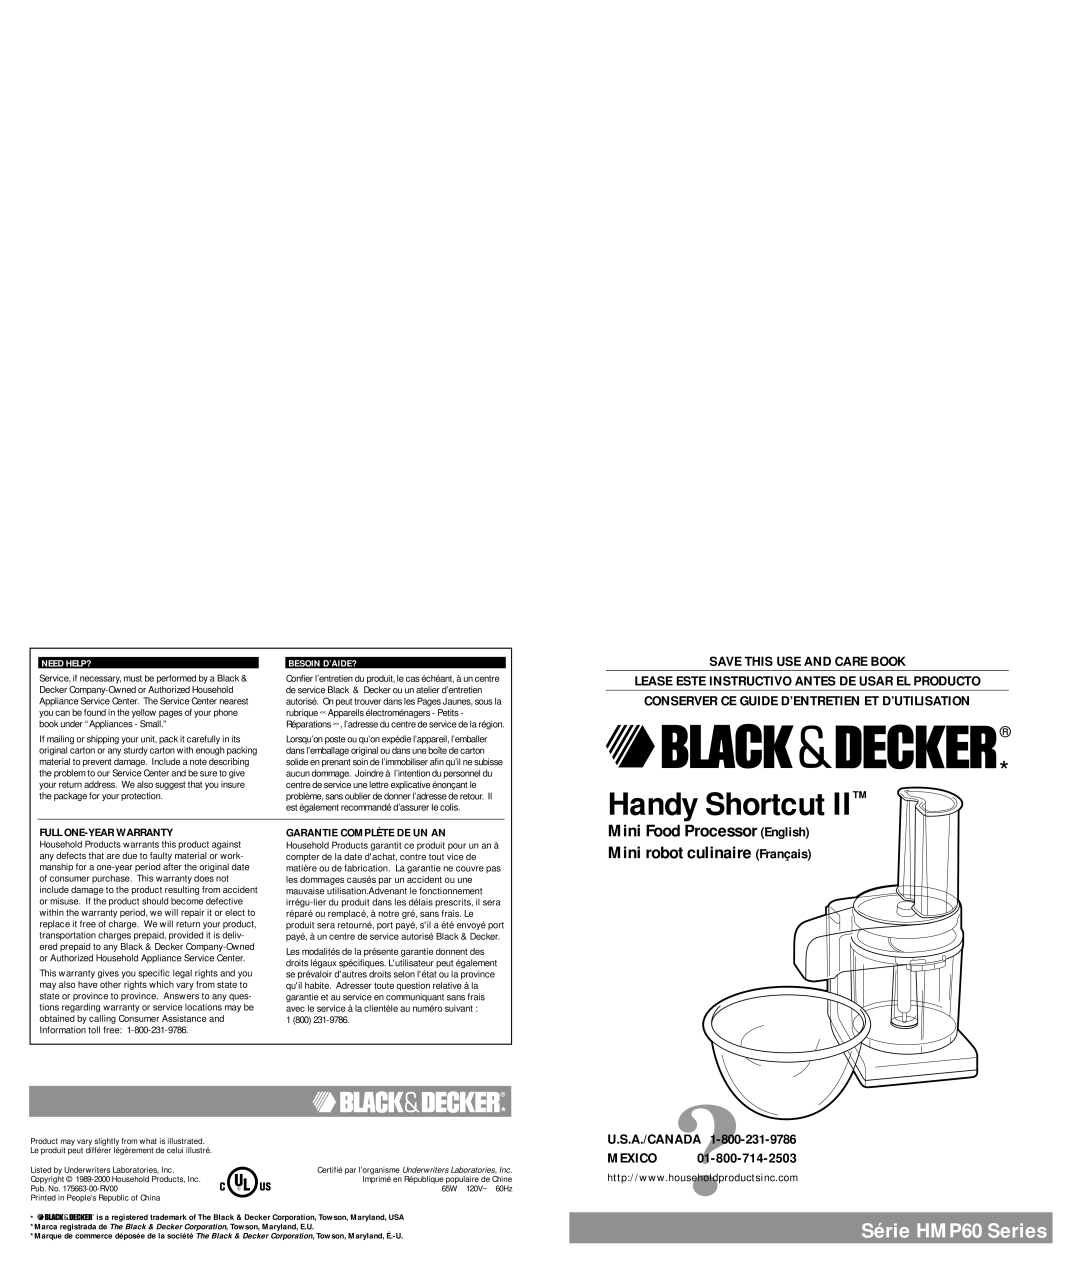 Black & Decker warranty Série HMP60 Series, Full One-Yearwarranty, Garantie Complète De Un An, Handy Shortcut 